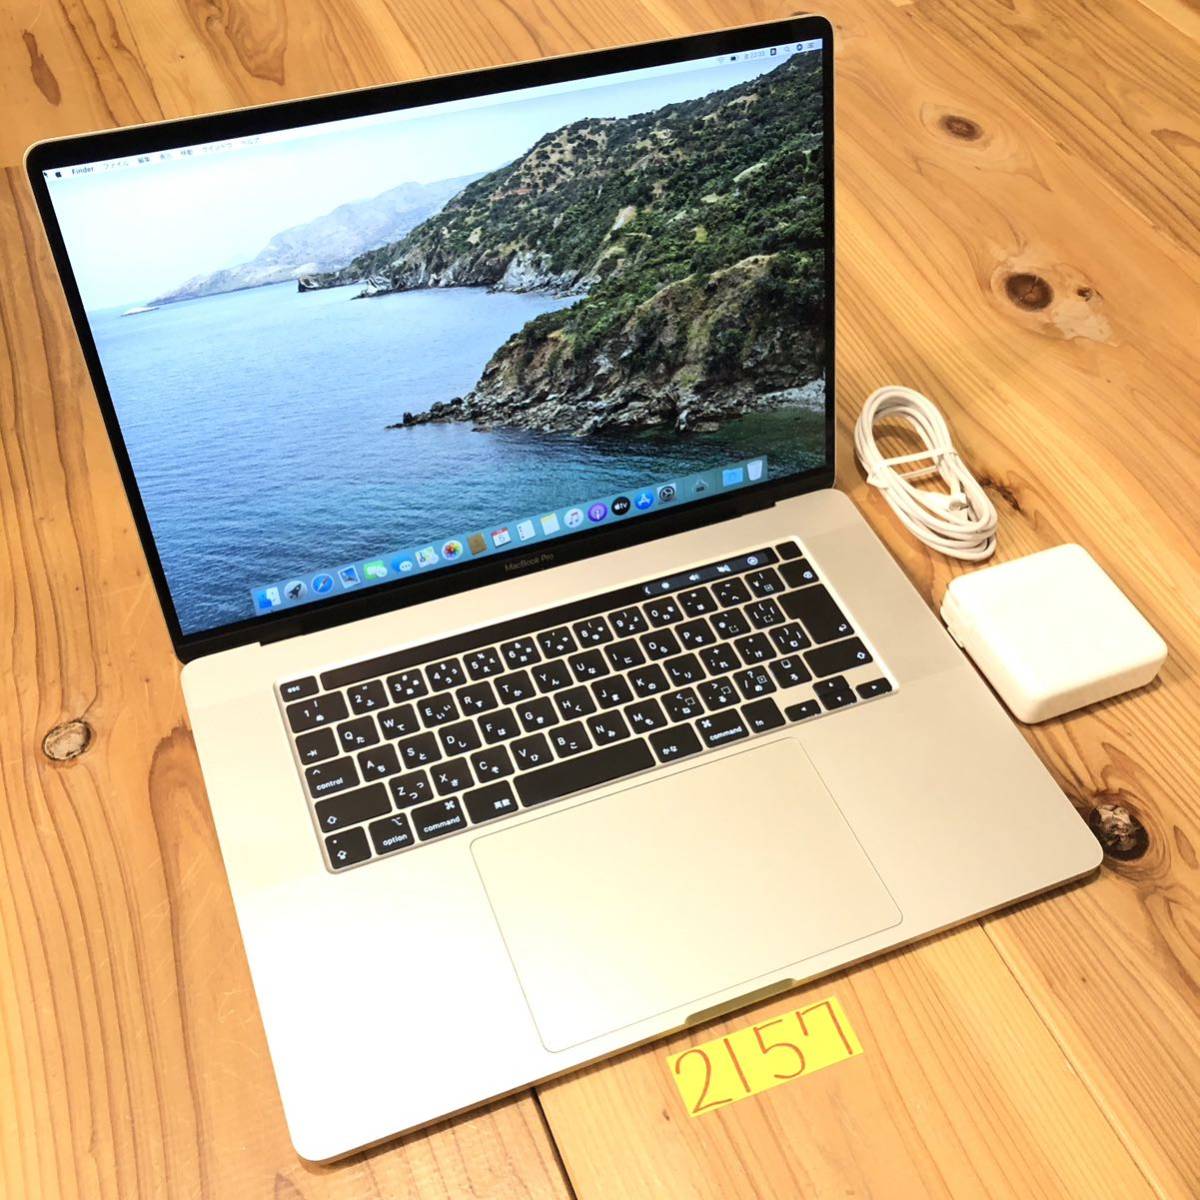 MacBook pro 16インチ 2019 i9 メモリ32GB 1TBSSD